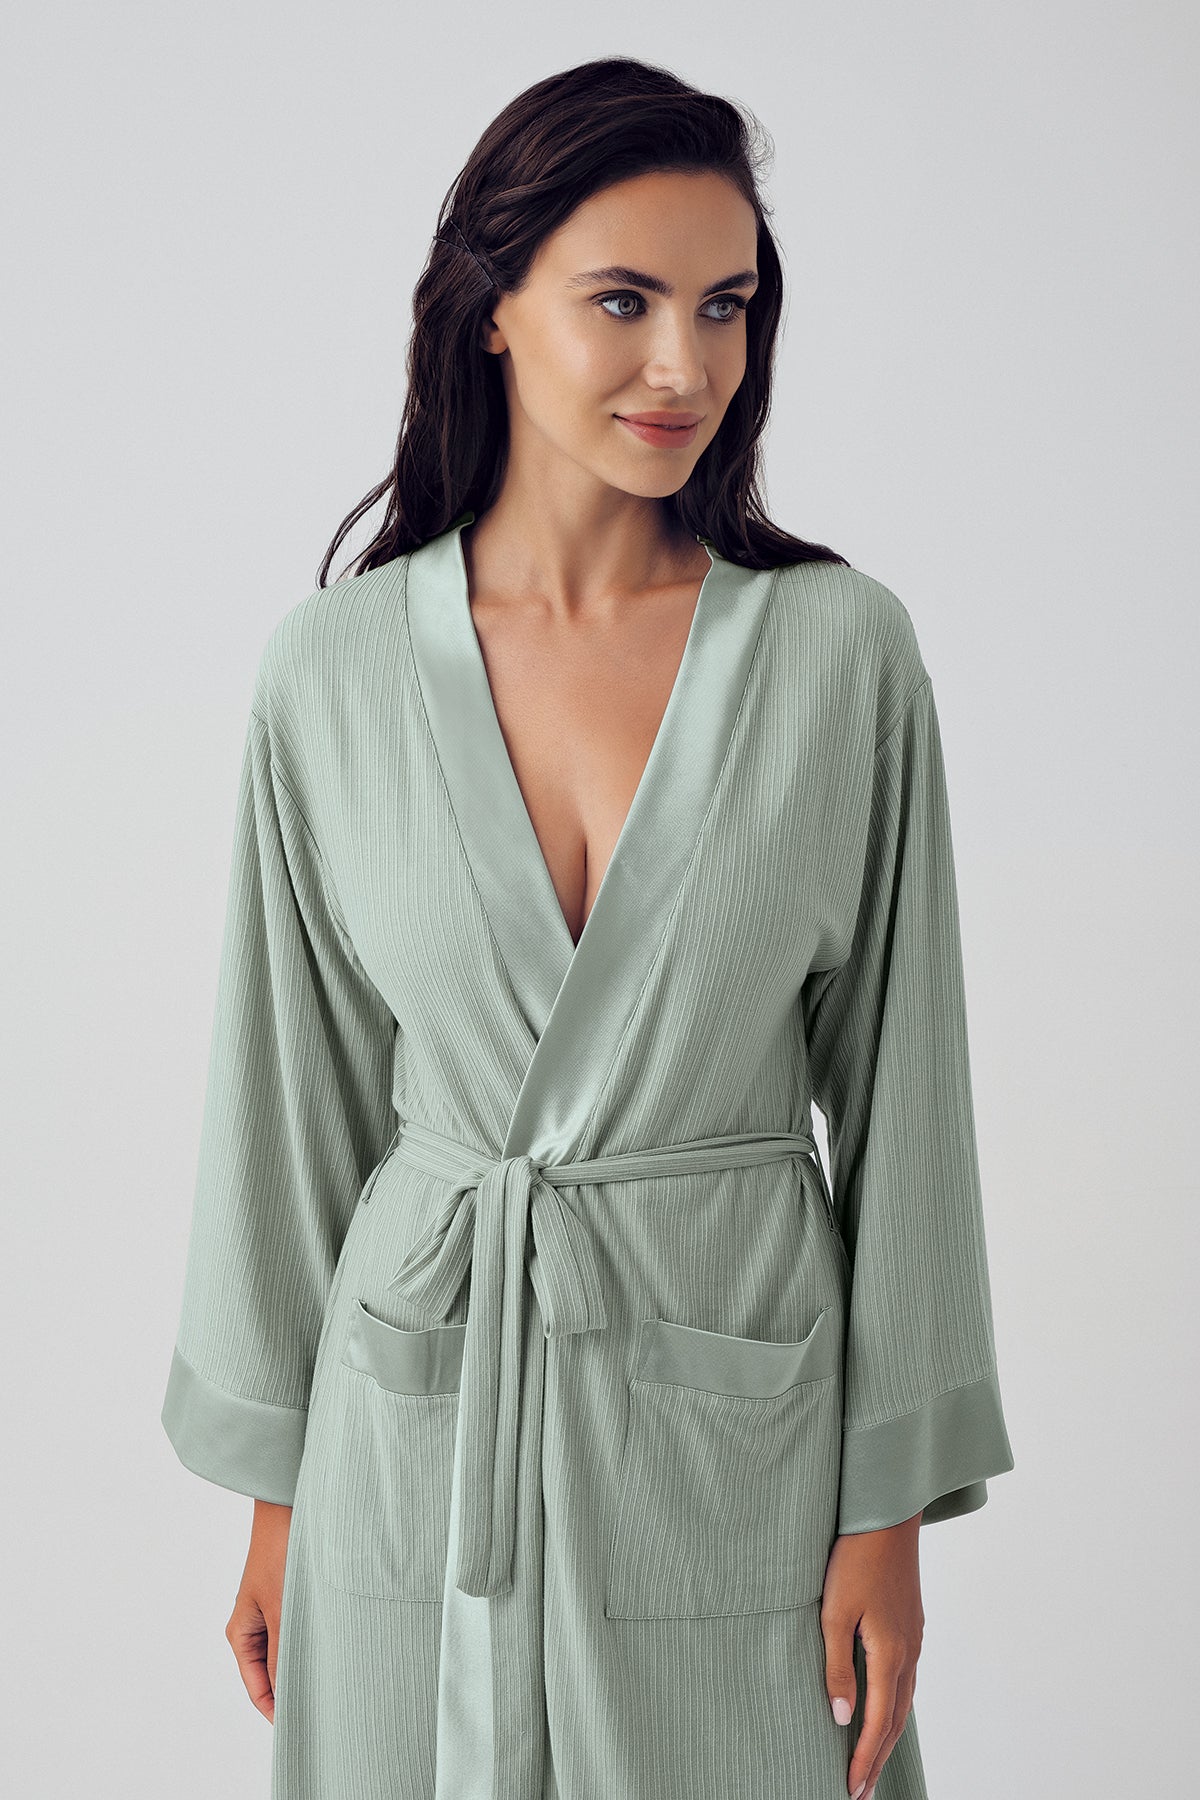 Shopymommy 15506 Bias Detailed Maternity Robe Green